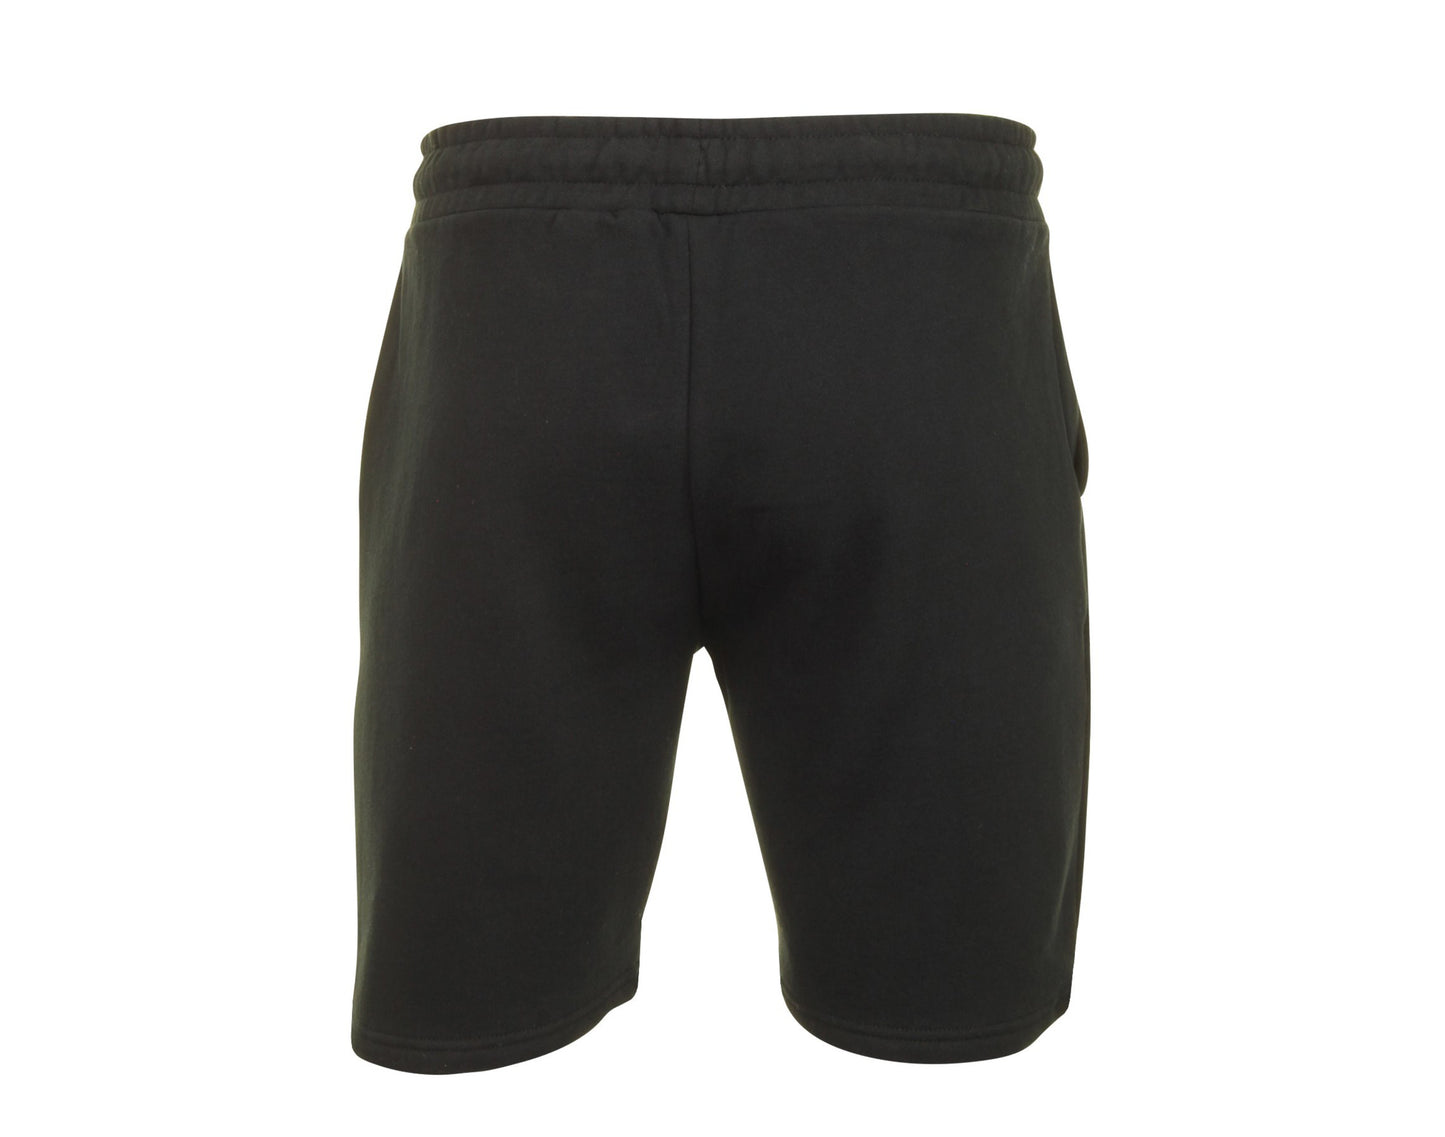 Ellesse Noli Anthracite Black Men's Shorts SHS01894-005